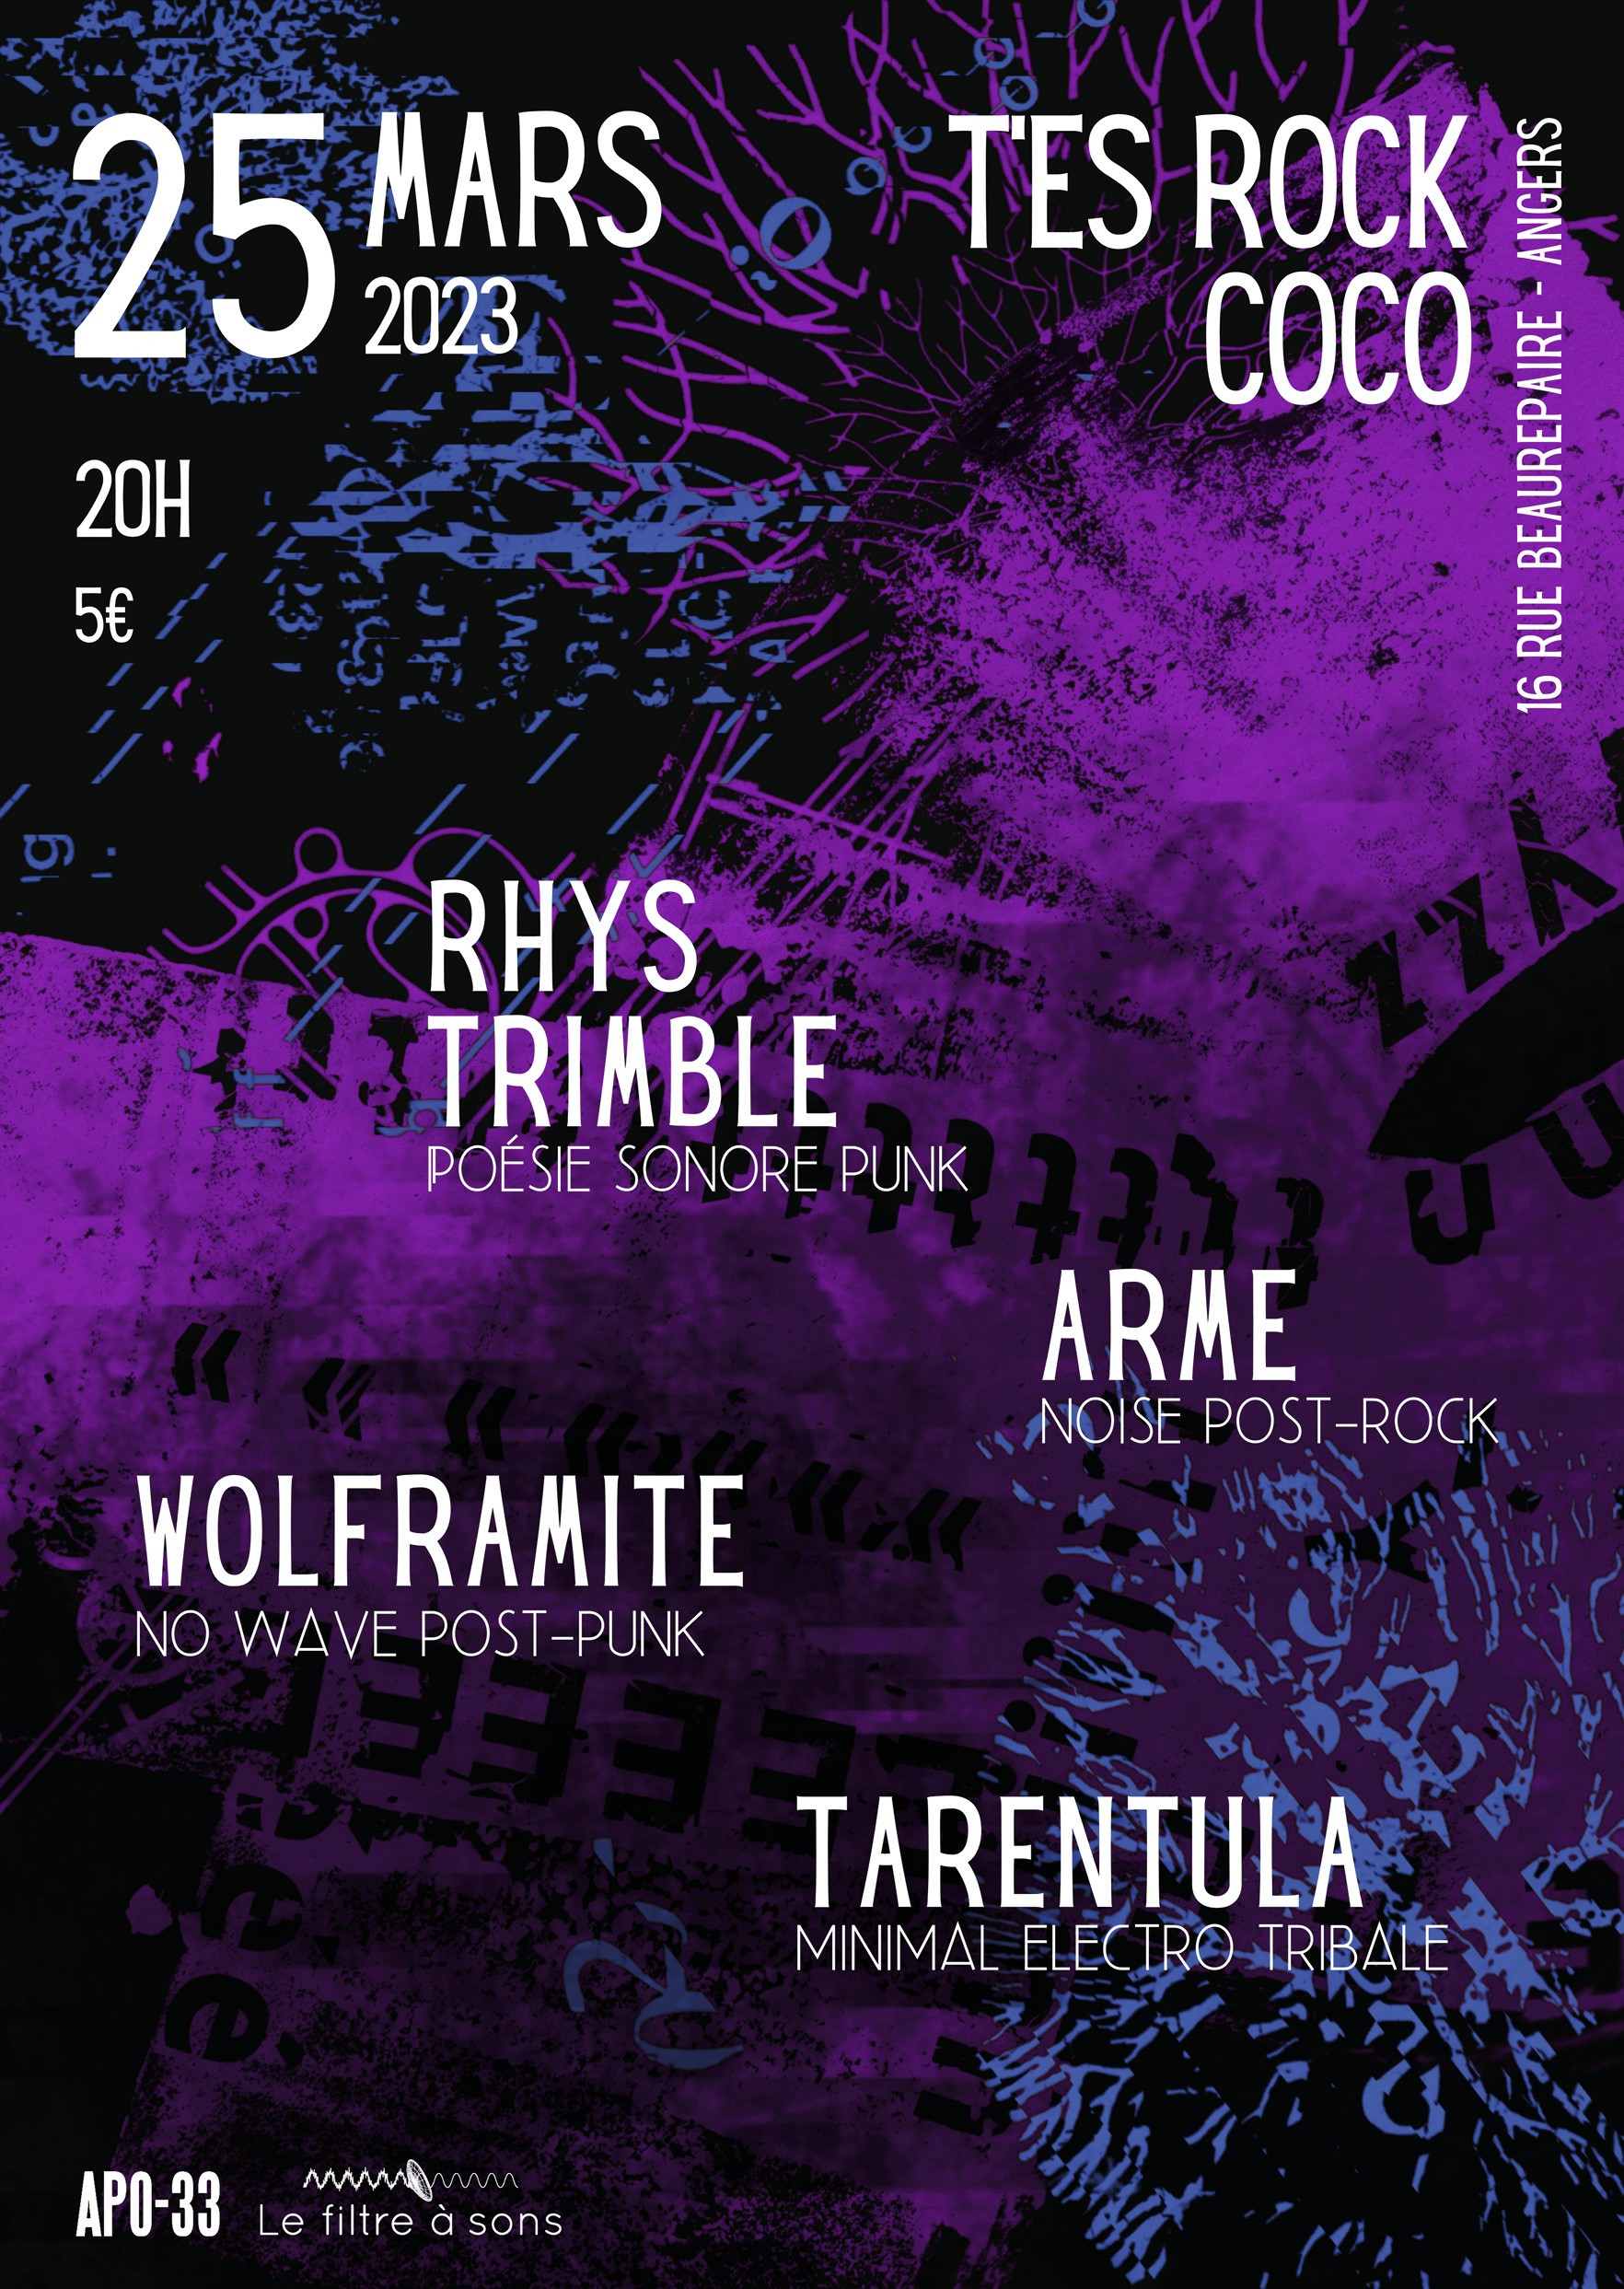 ARME / Wolframite / Rhys Trimble / Tarentula – poésie sonore, électro, punk & dissonances – Angers